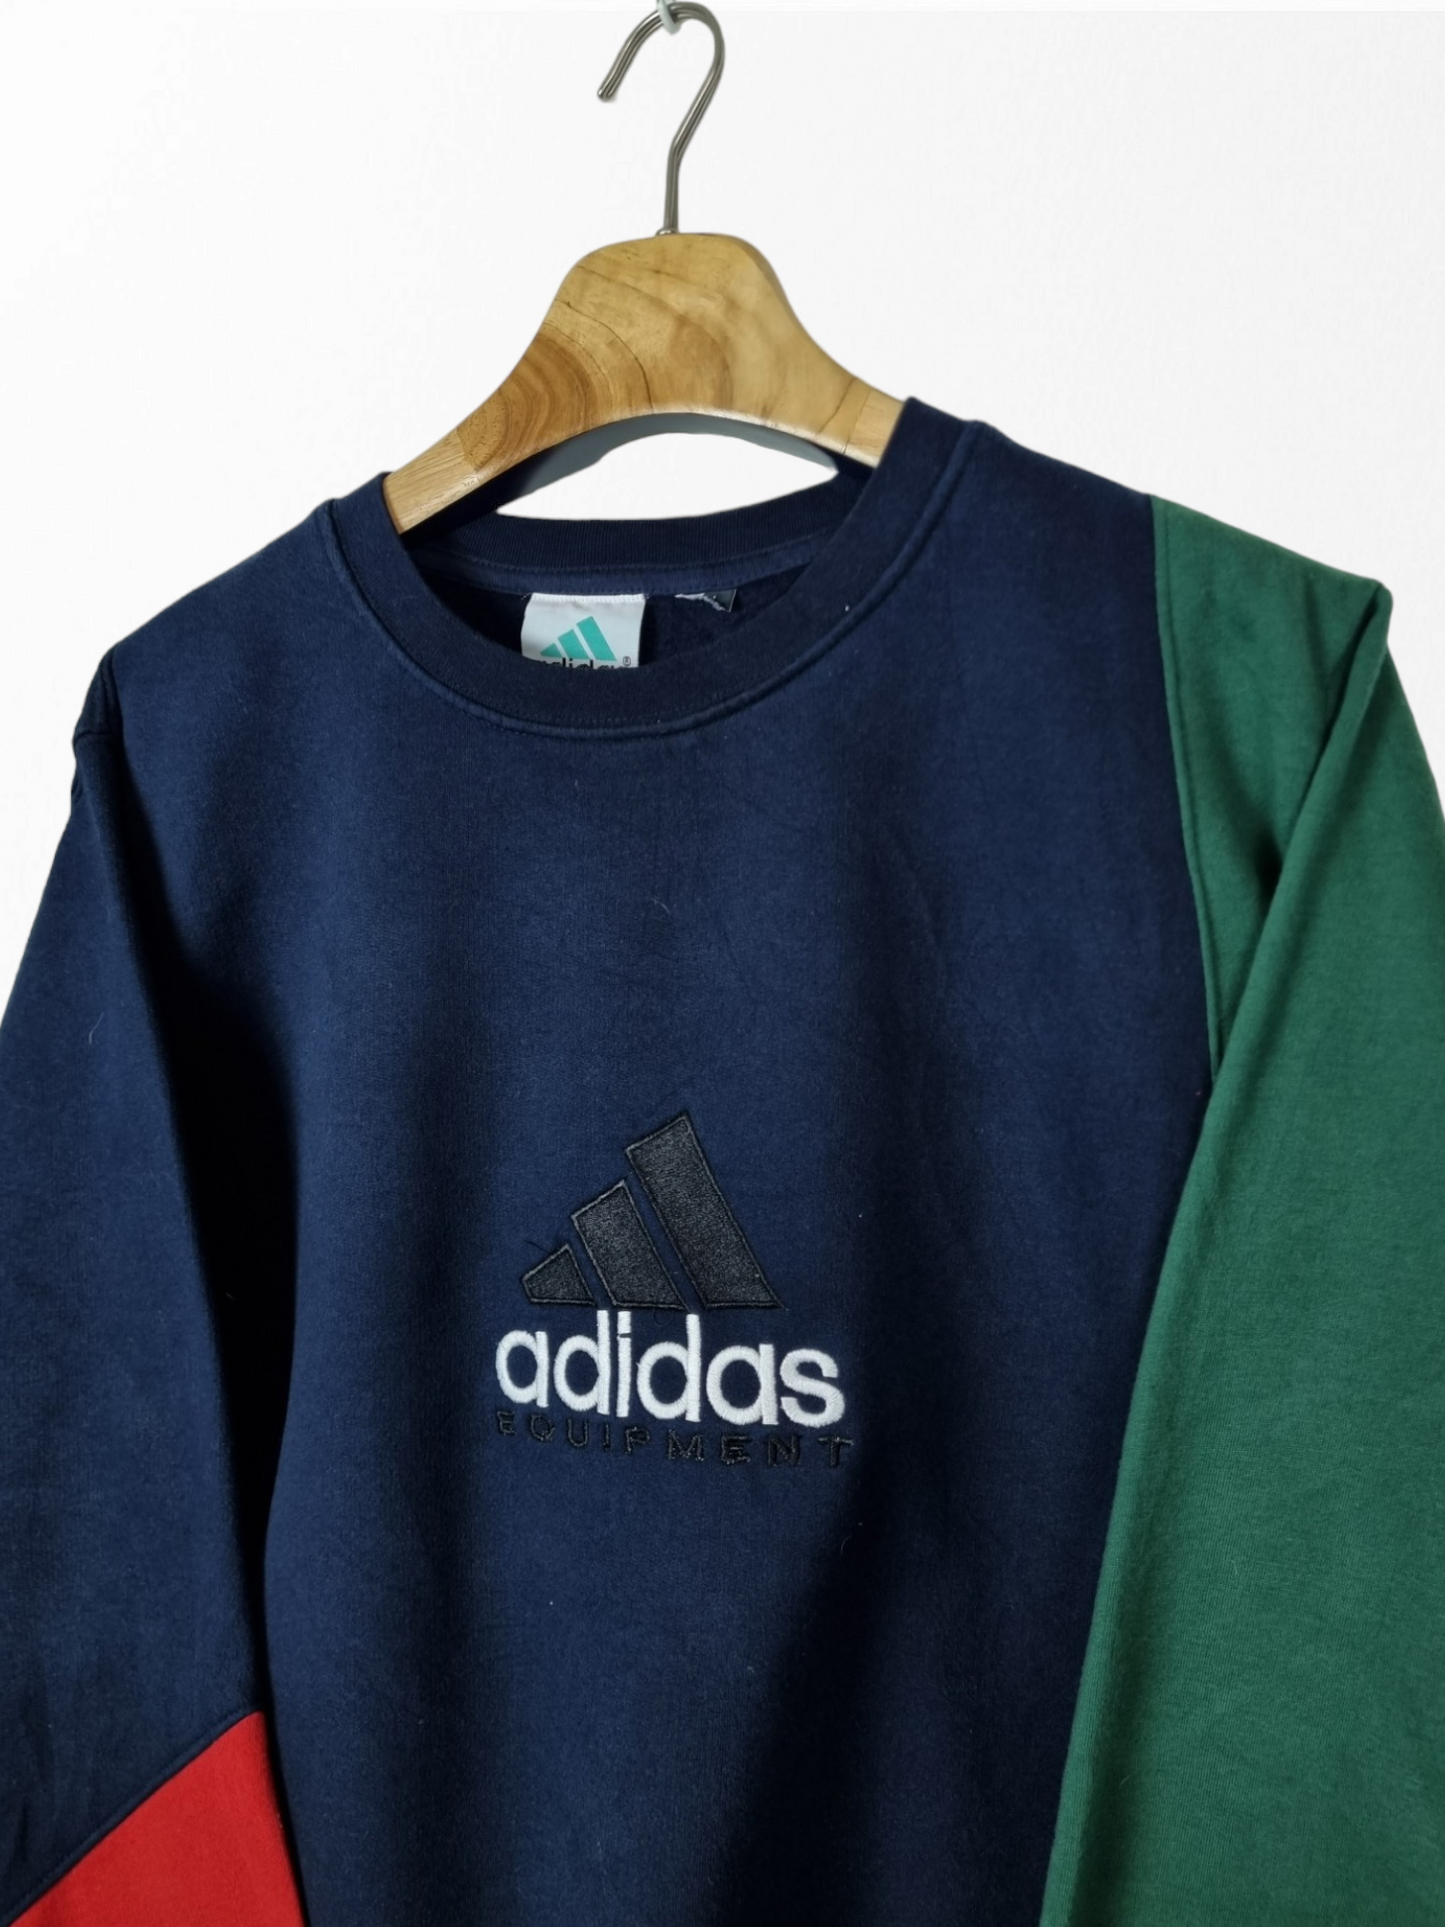 Adidas equipment sweater maat M/L